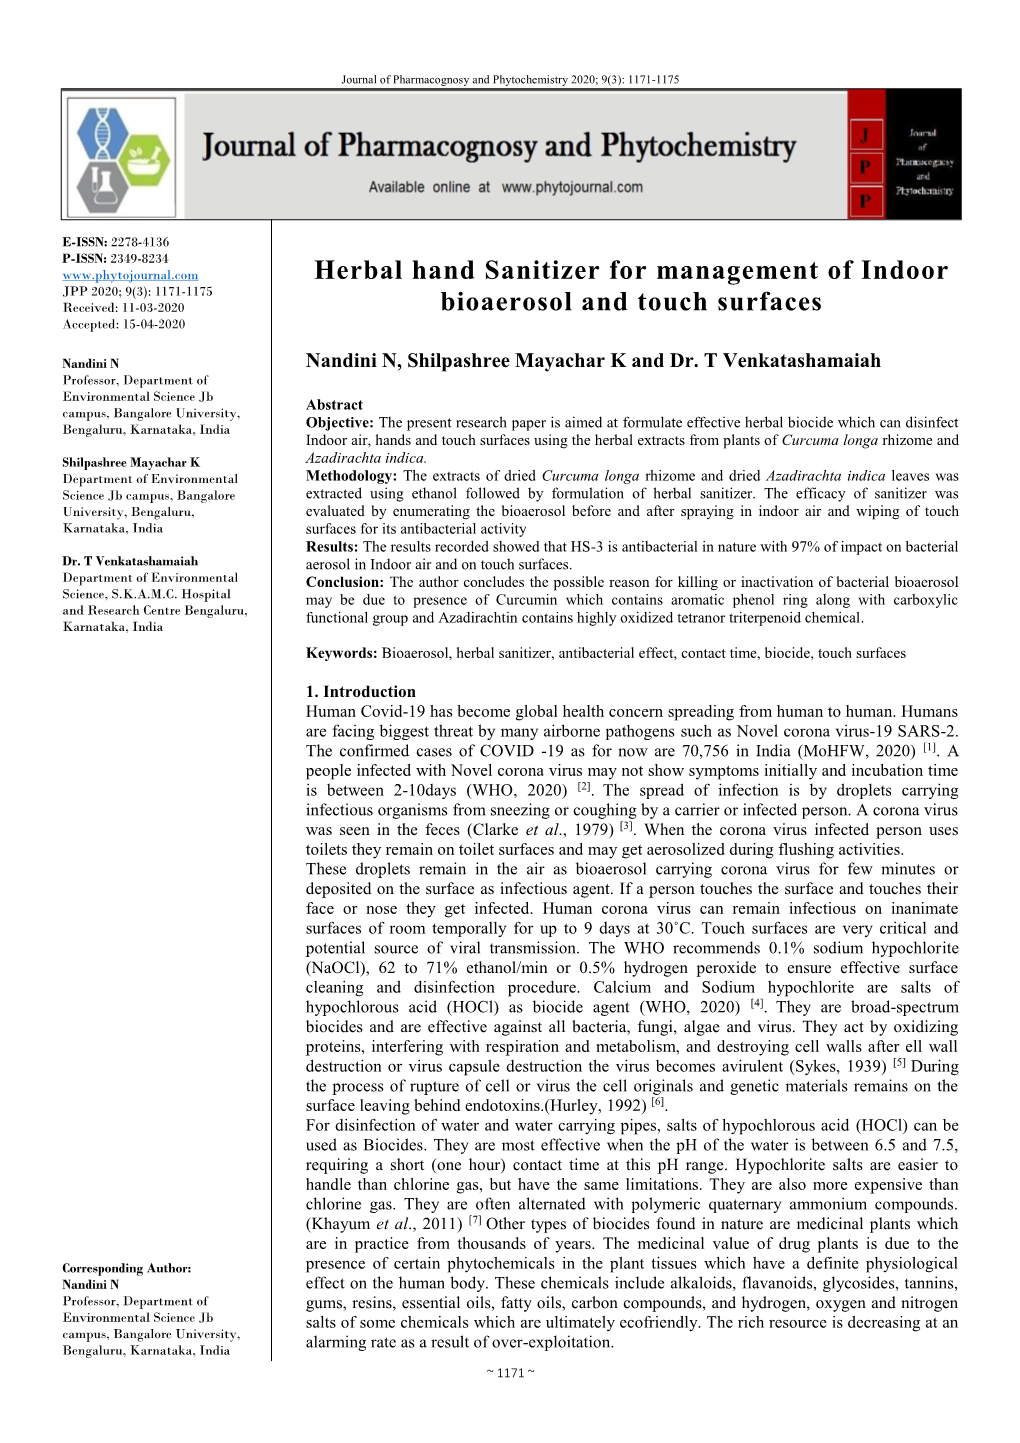 Herbal Hand Sanitizer for Management of Indoor Bioaerosol